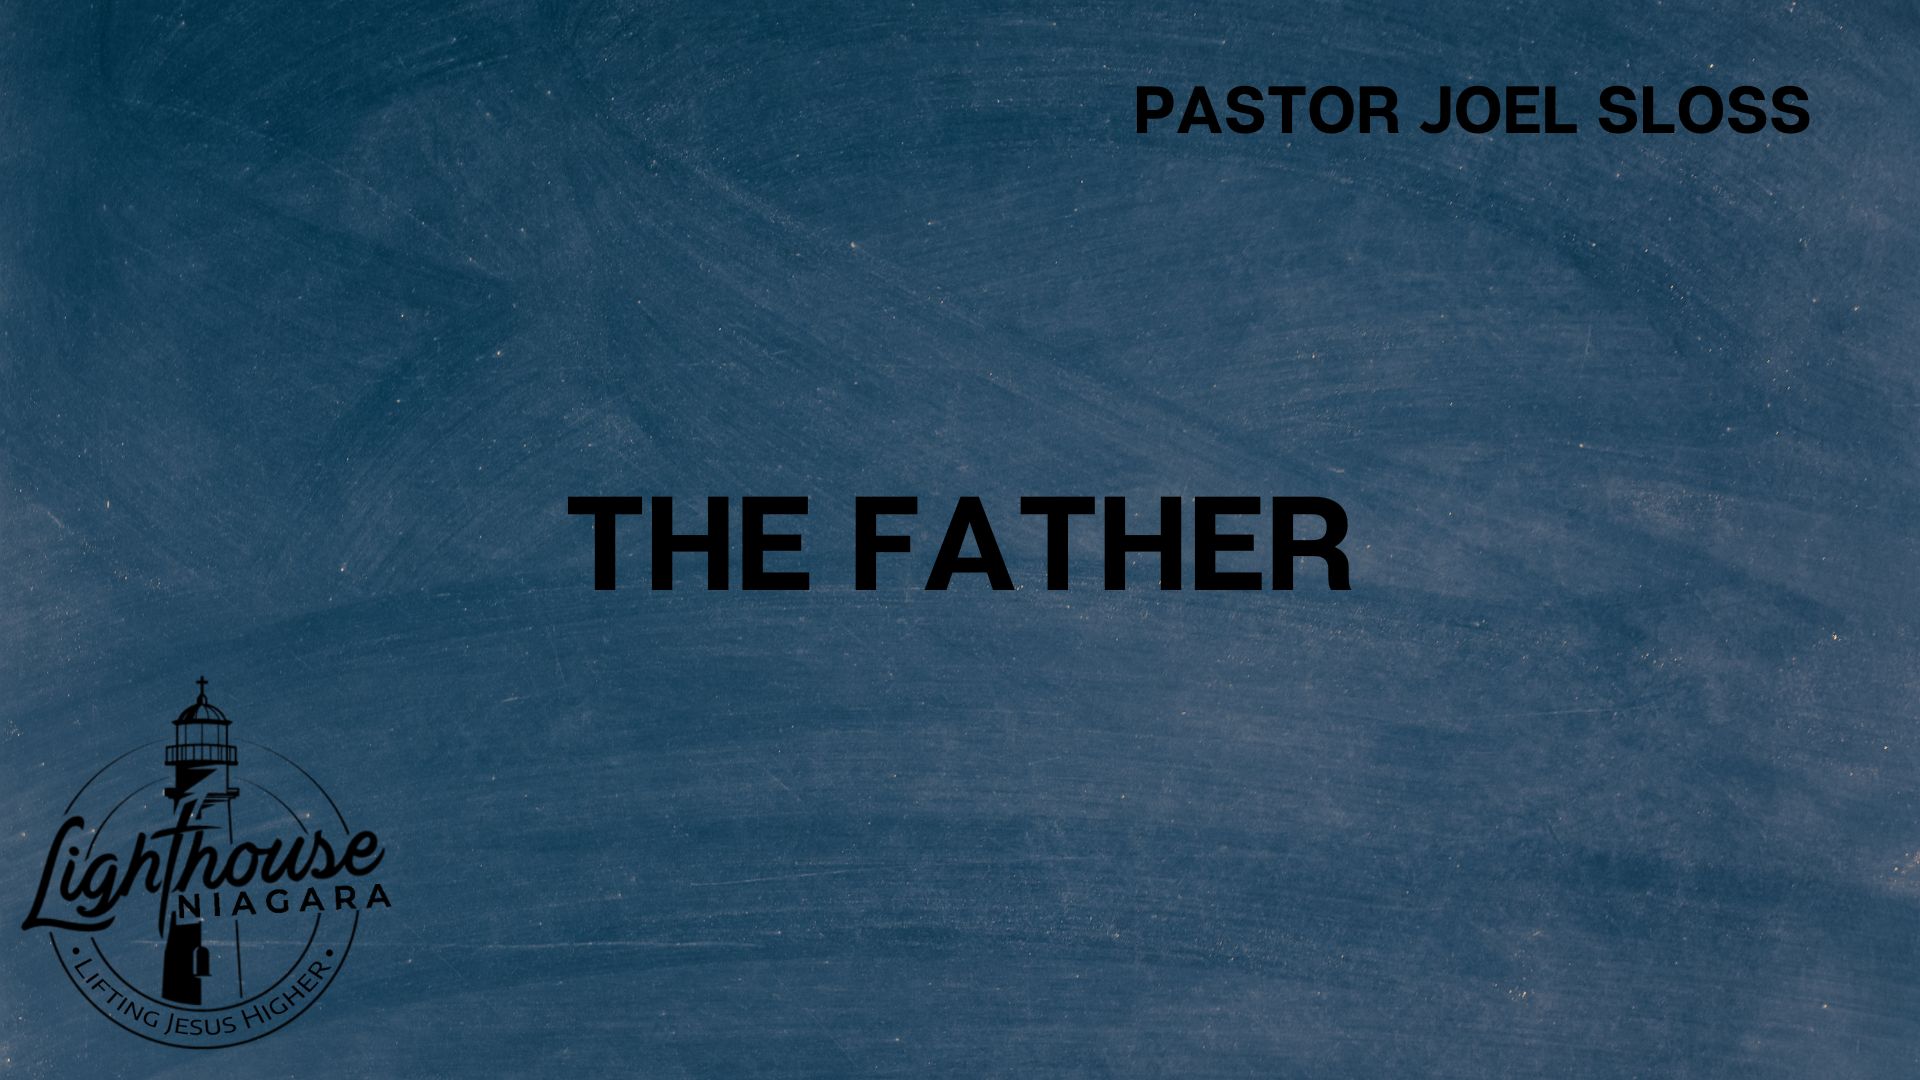 The Father - Pastor Joel Sloss